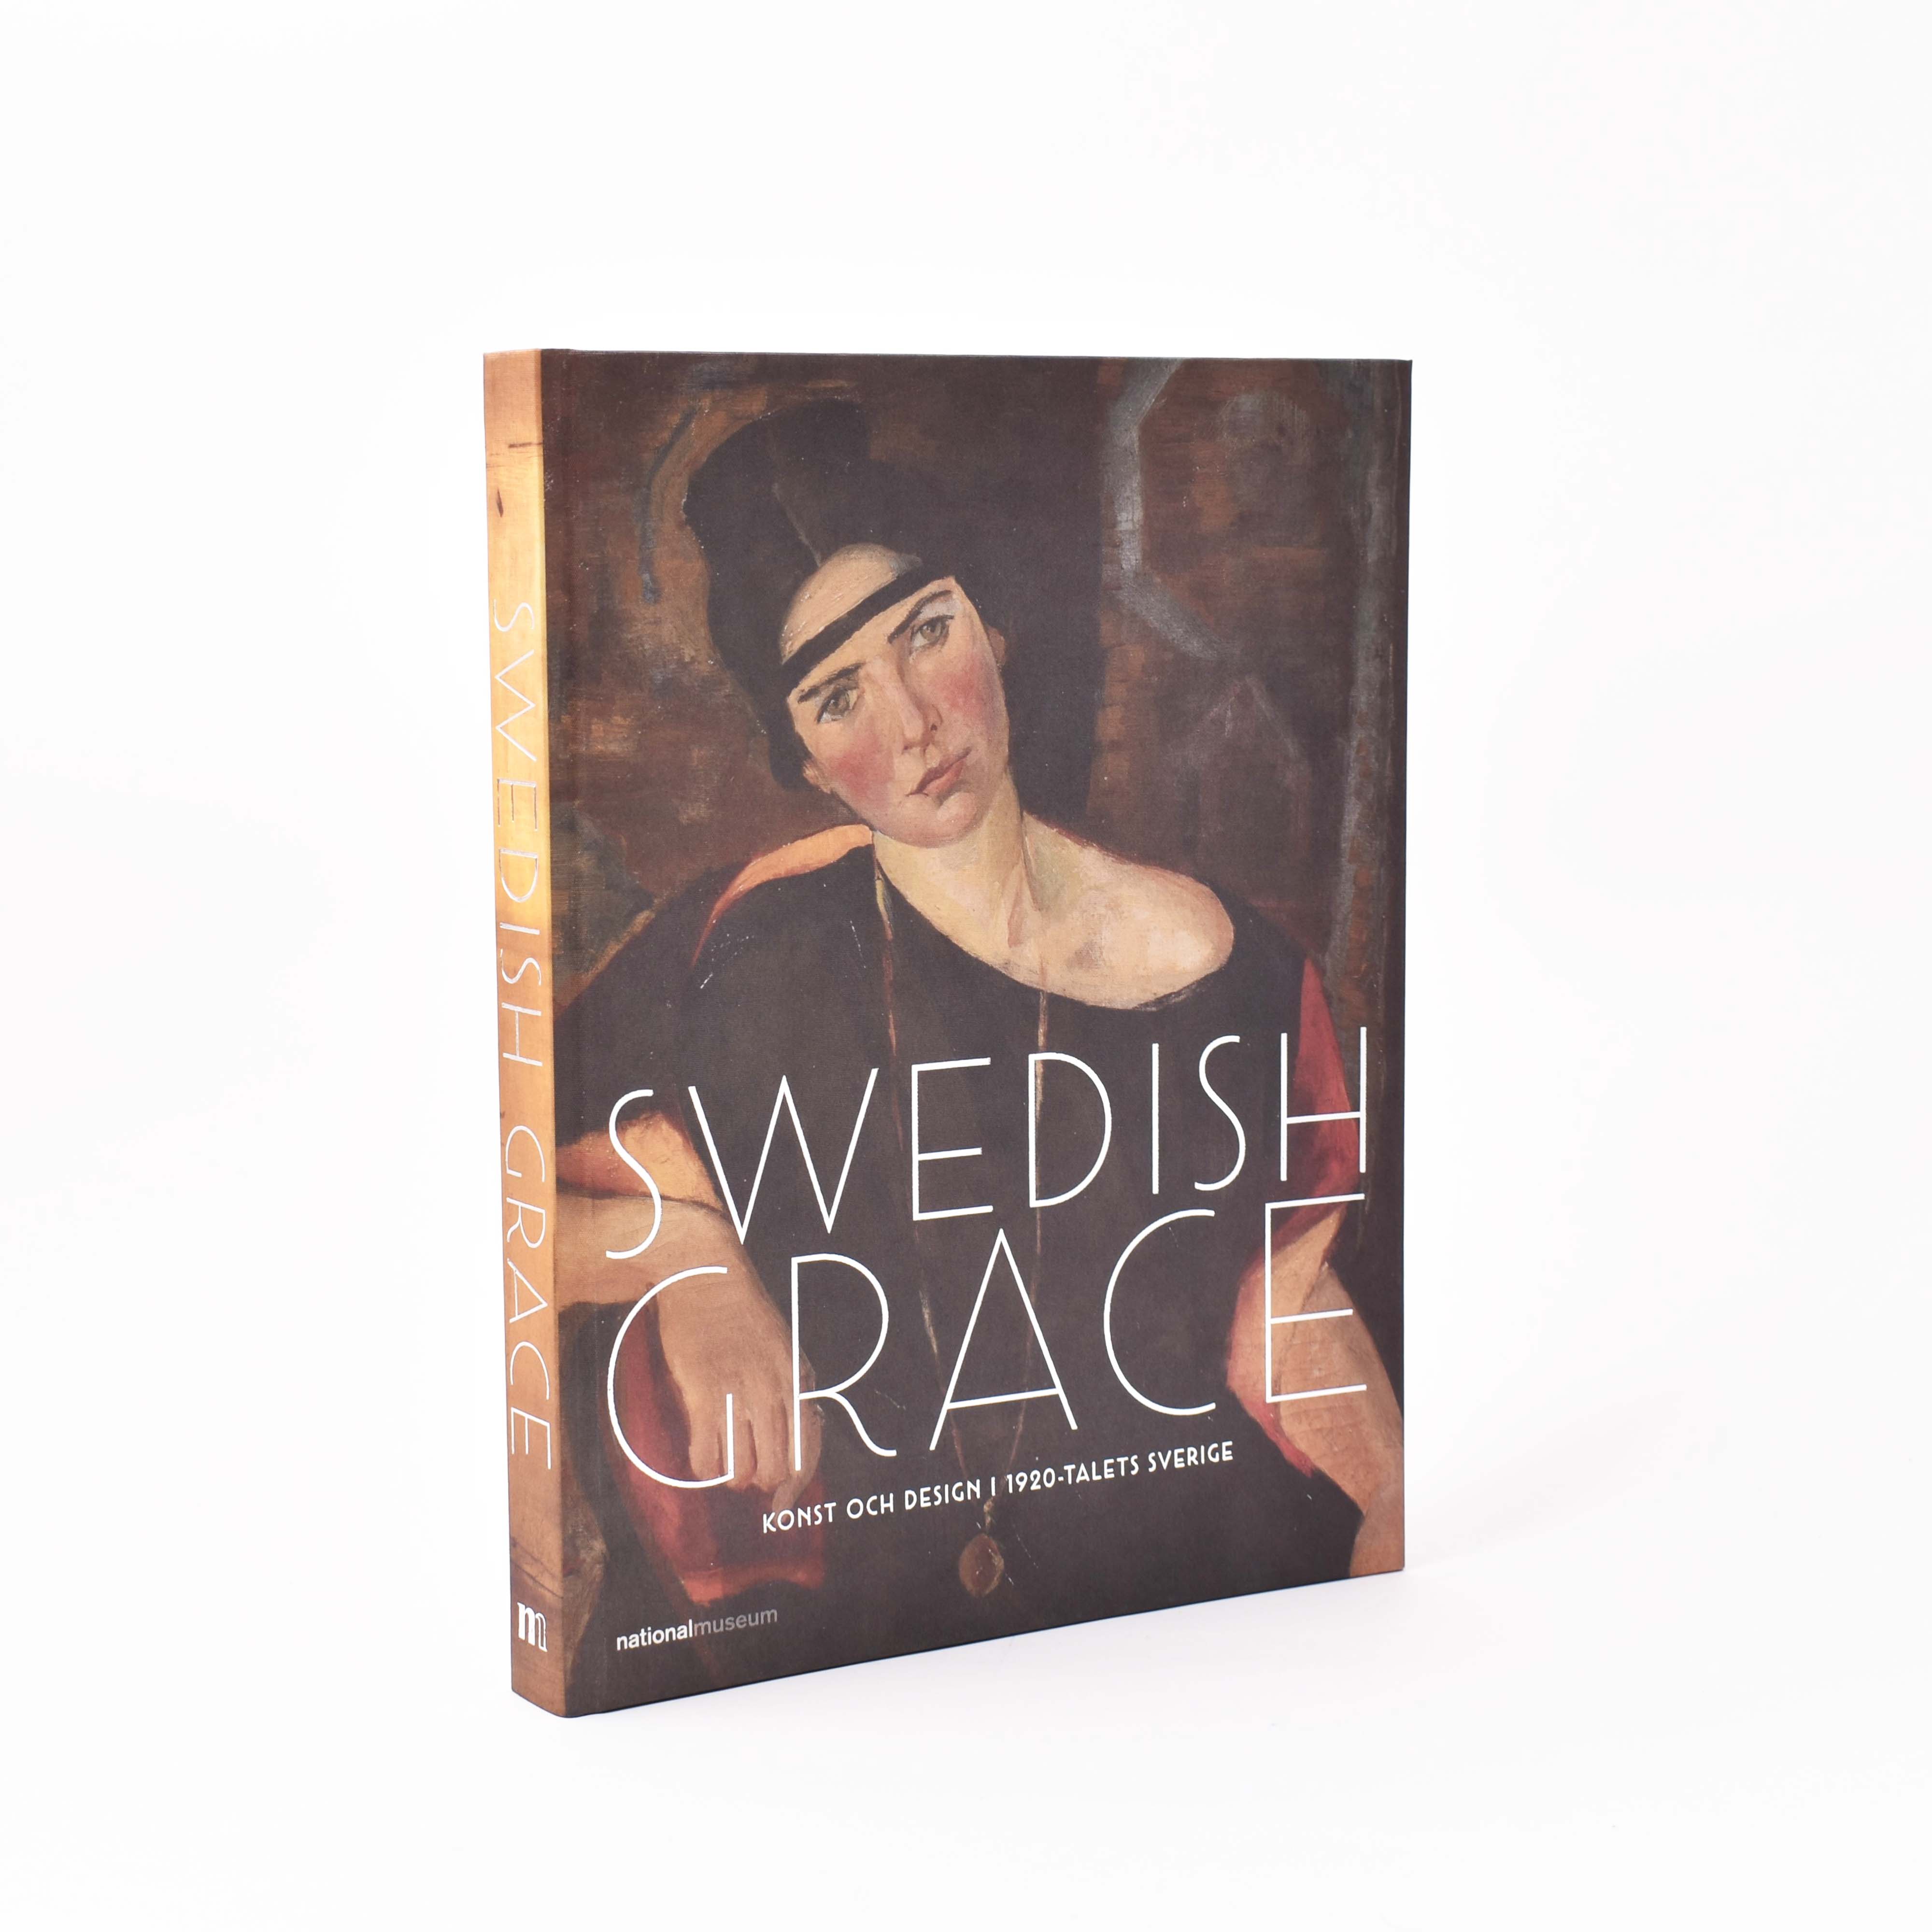 Boken swedish grace - konst och design i 1920 talets sverige utgiven av nationalmuseum